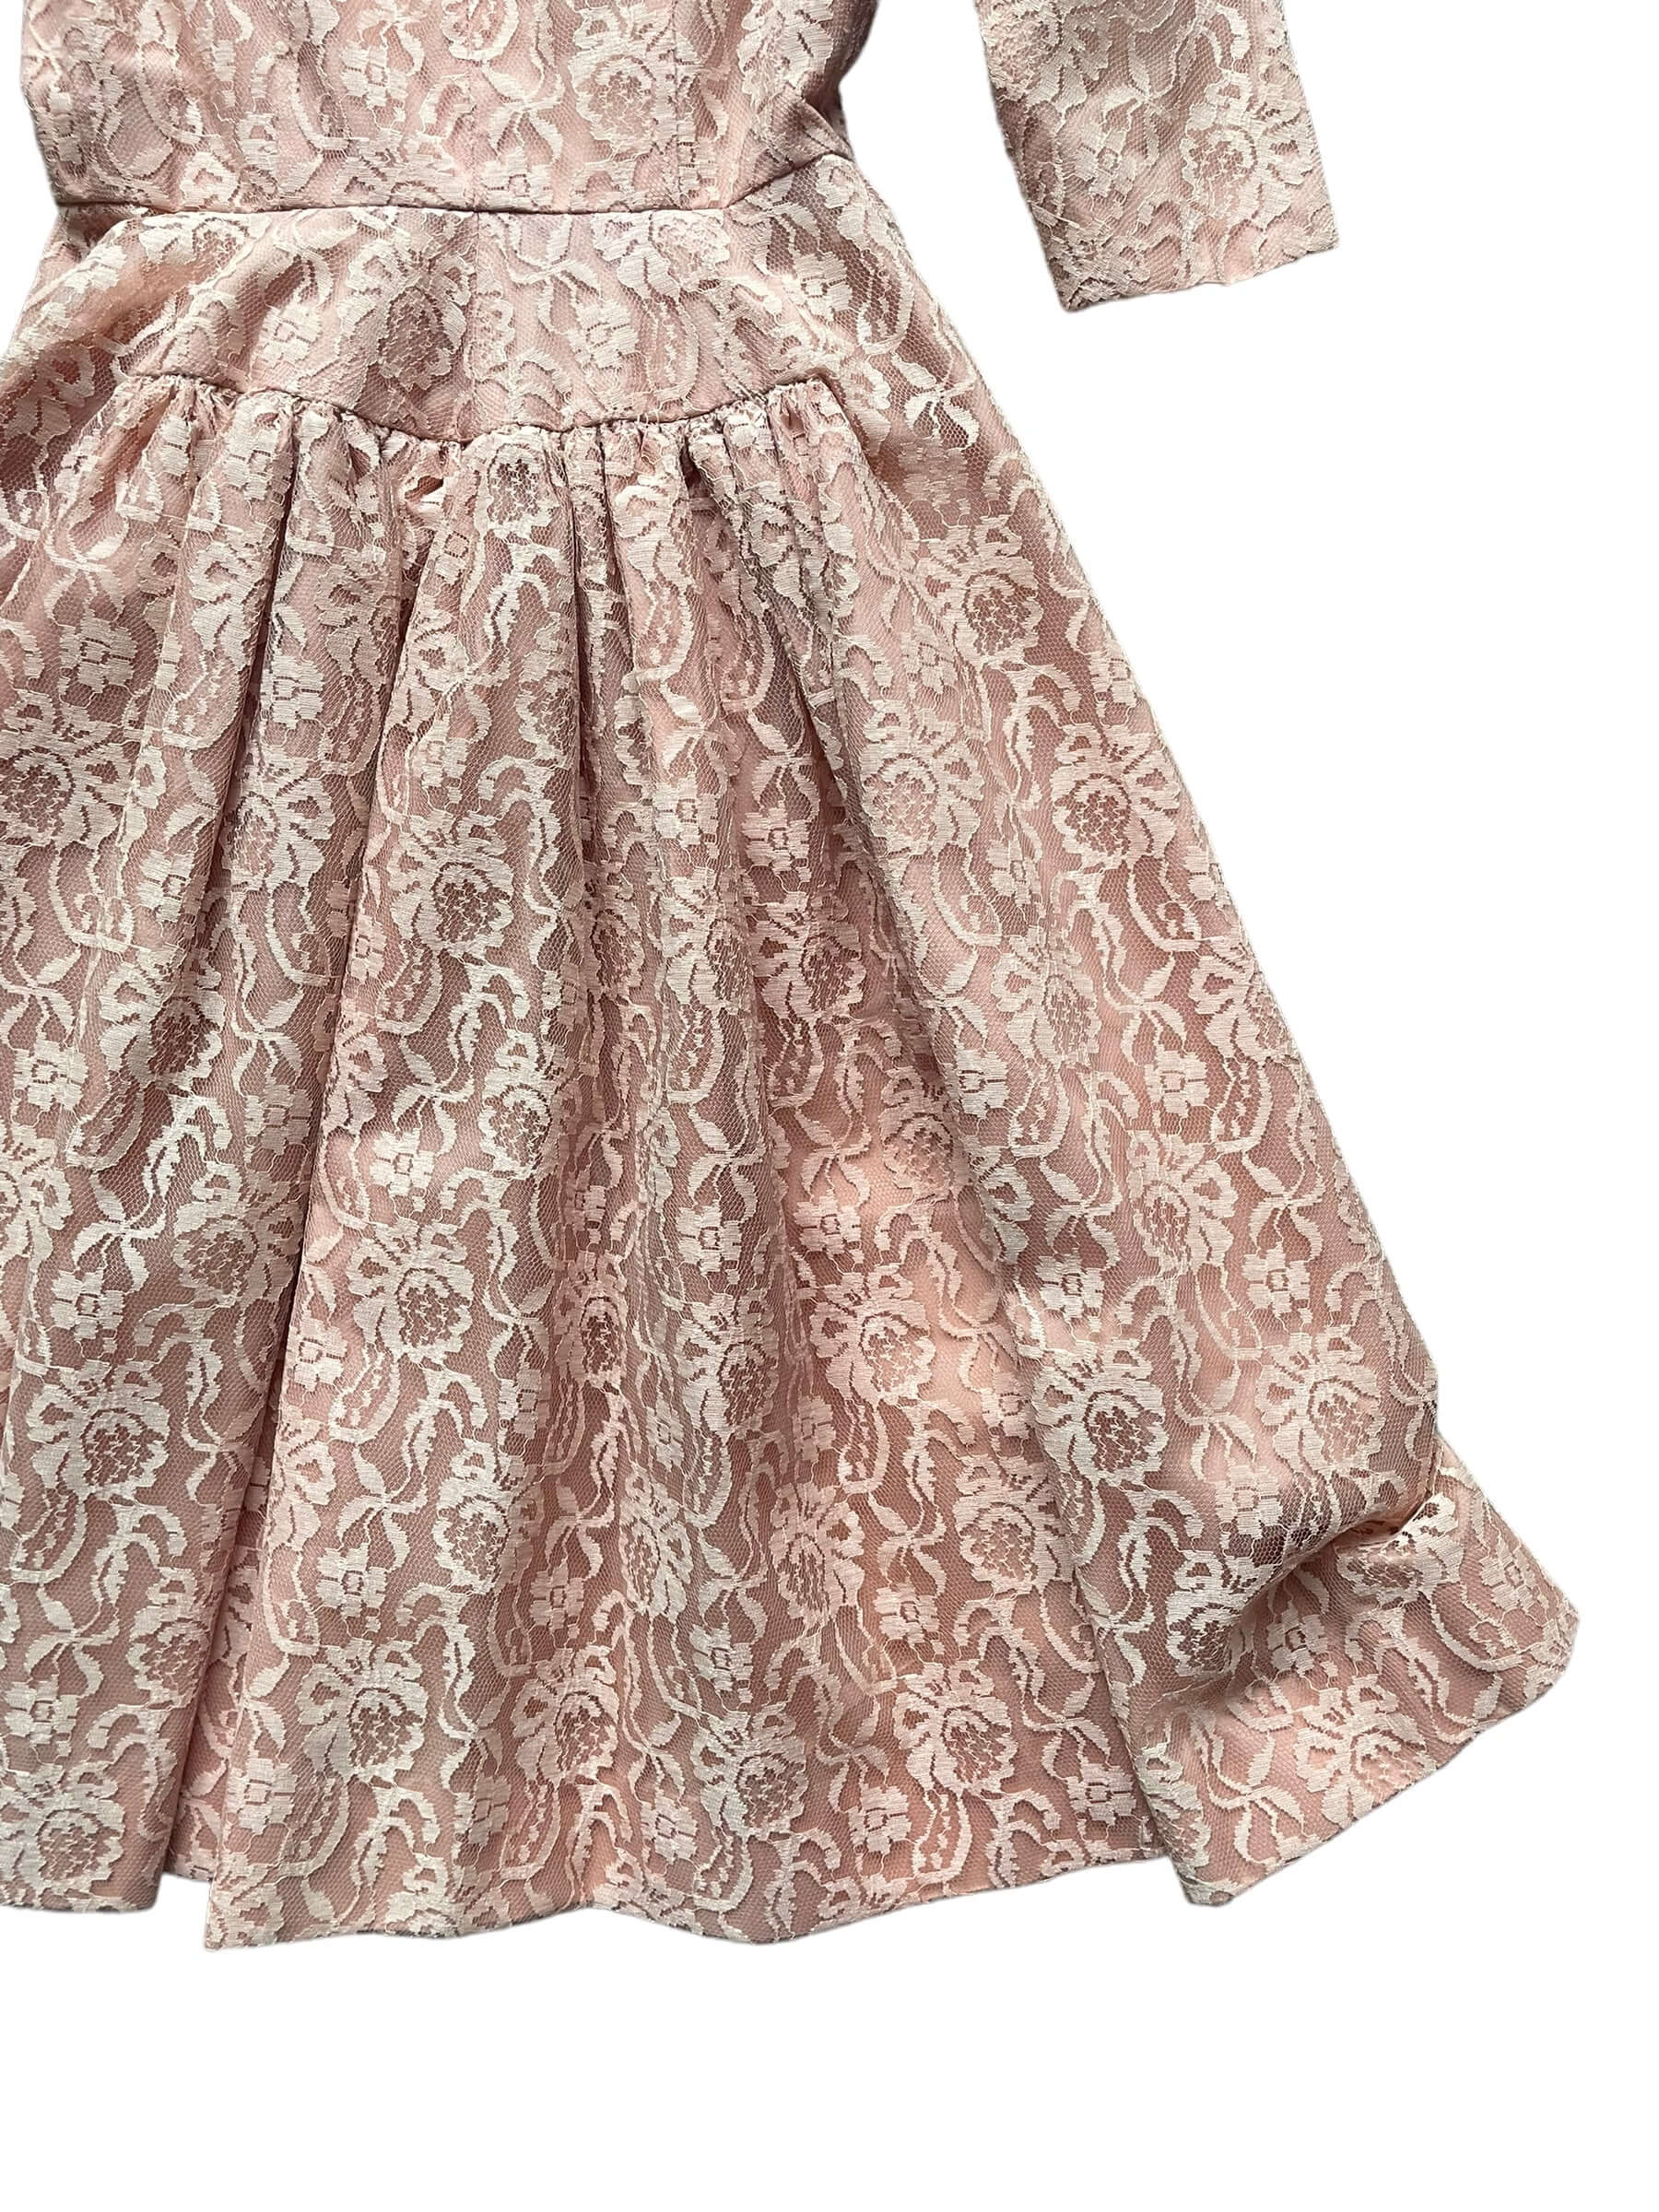 Back right skirt of Vintage 1950s Handmade Pink Lace Formal Dress |  Barn Owl Vintage Dresses | Seattle Vintage Ladies Clothing